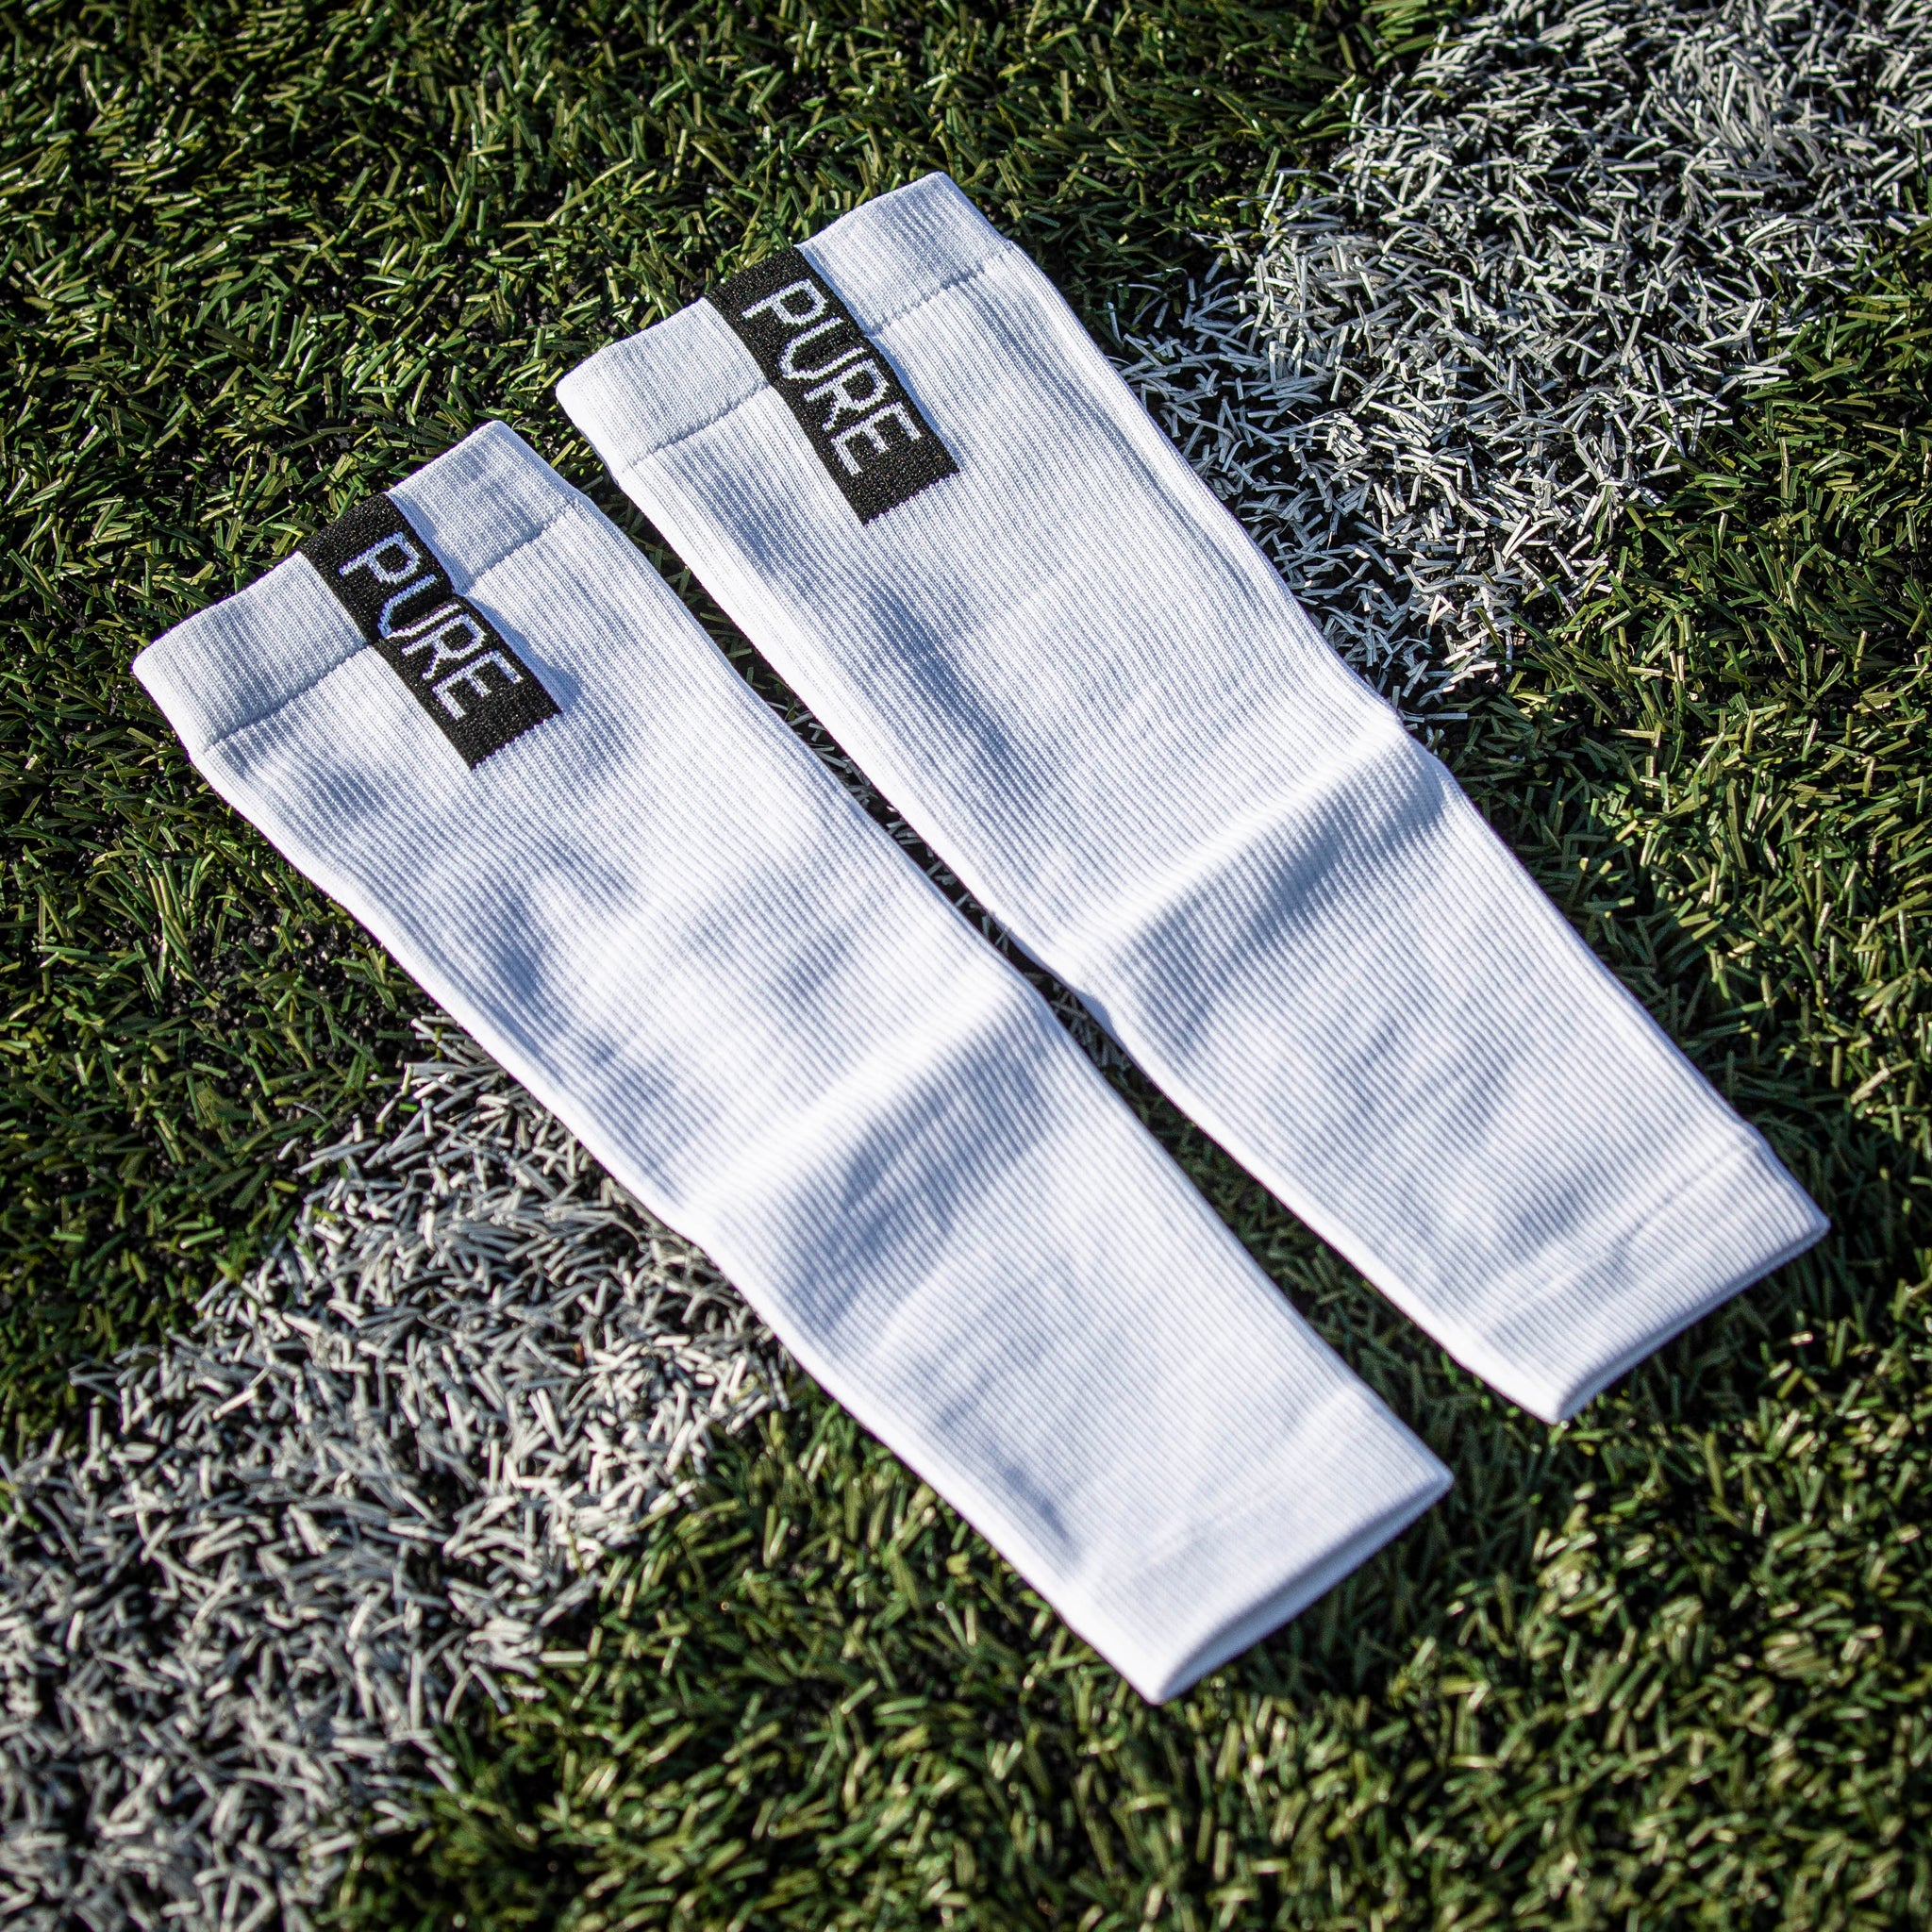 Pure Sleeves White – Pure Grip Socks